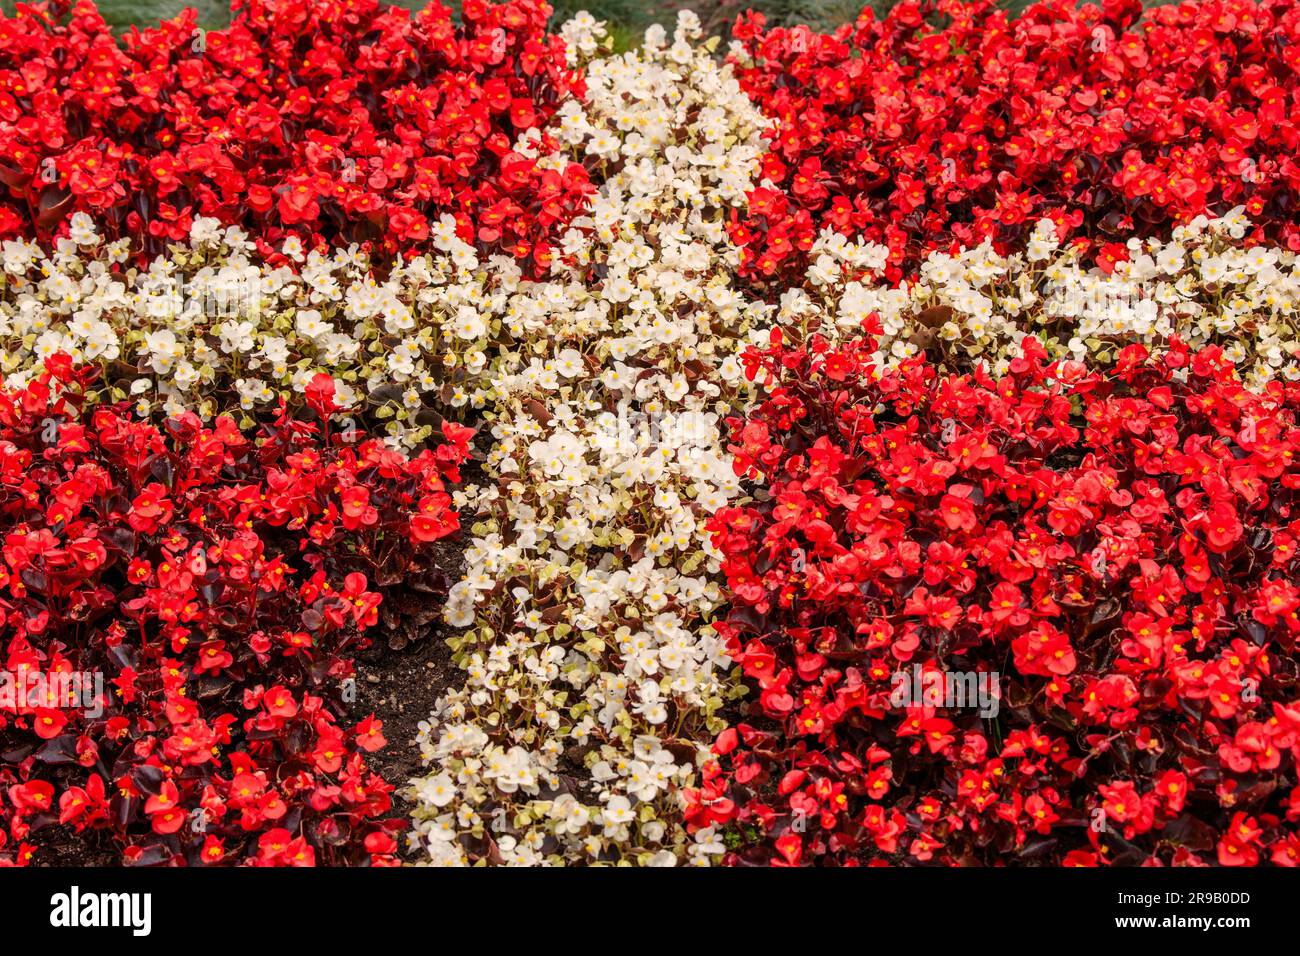 Red and white flowers illustrating the flag of Denmark Stock Photo